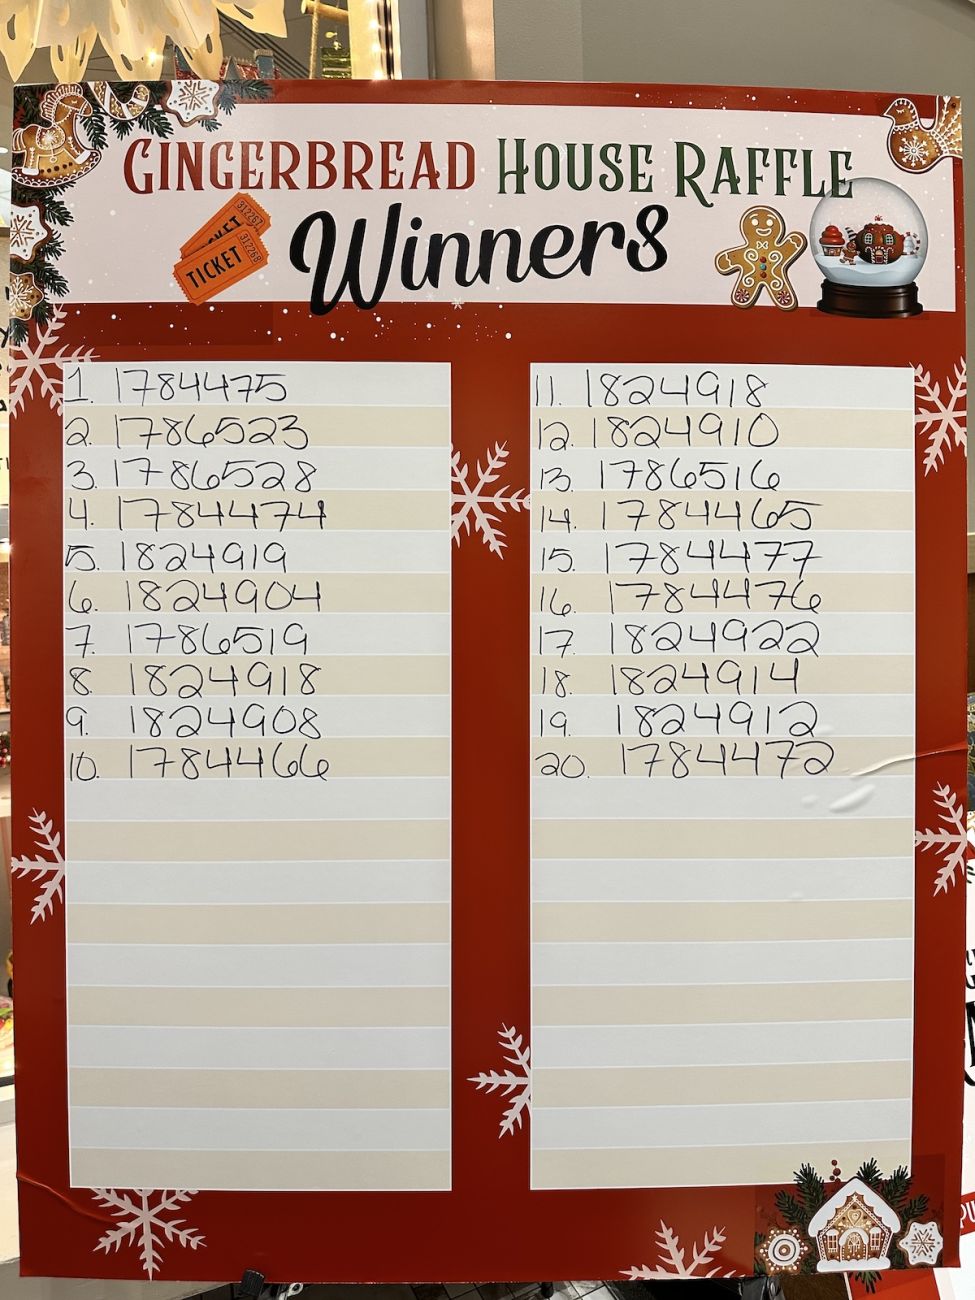 Board with winning raffle numbers